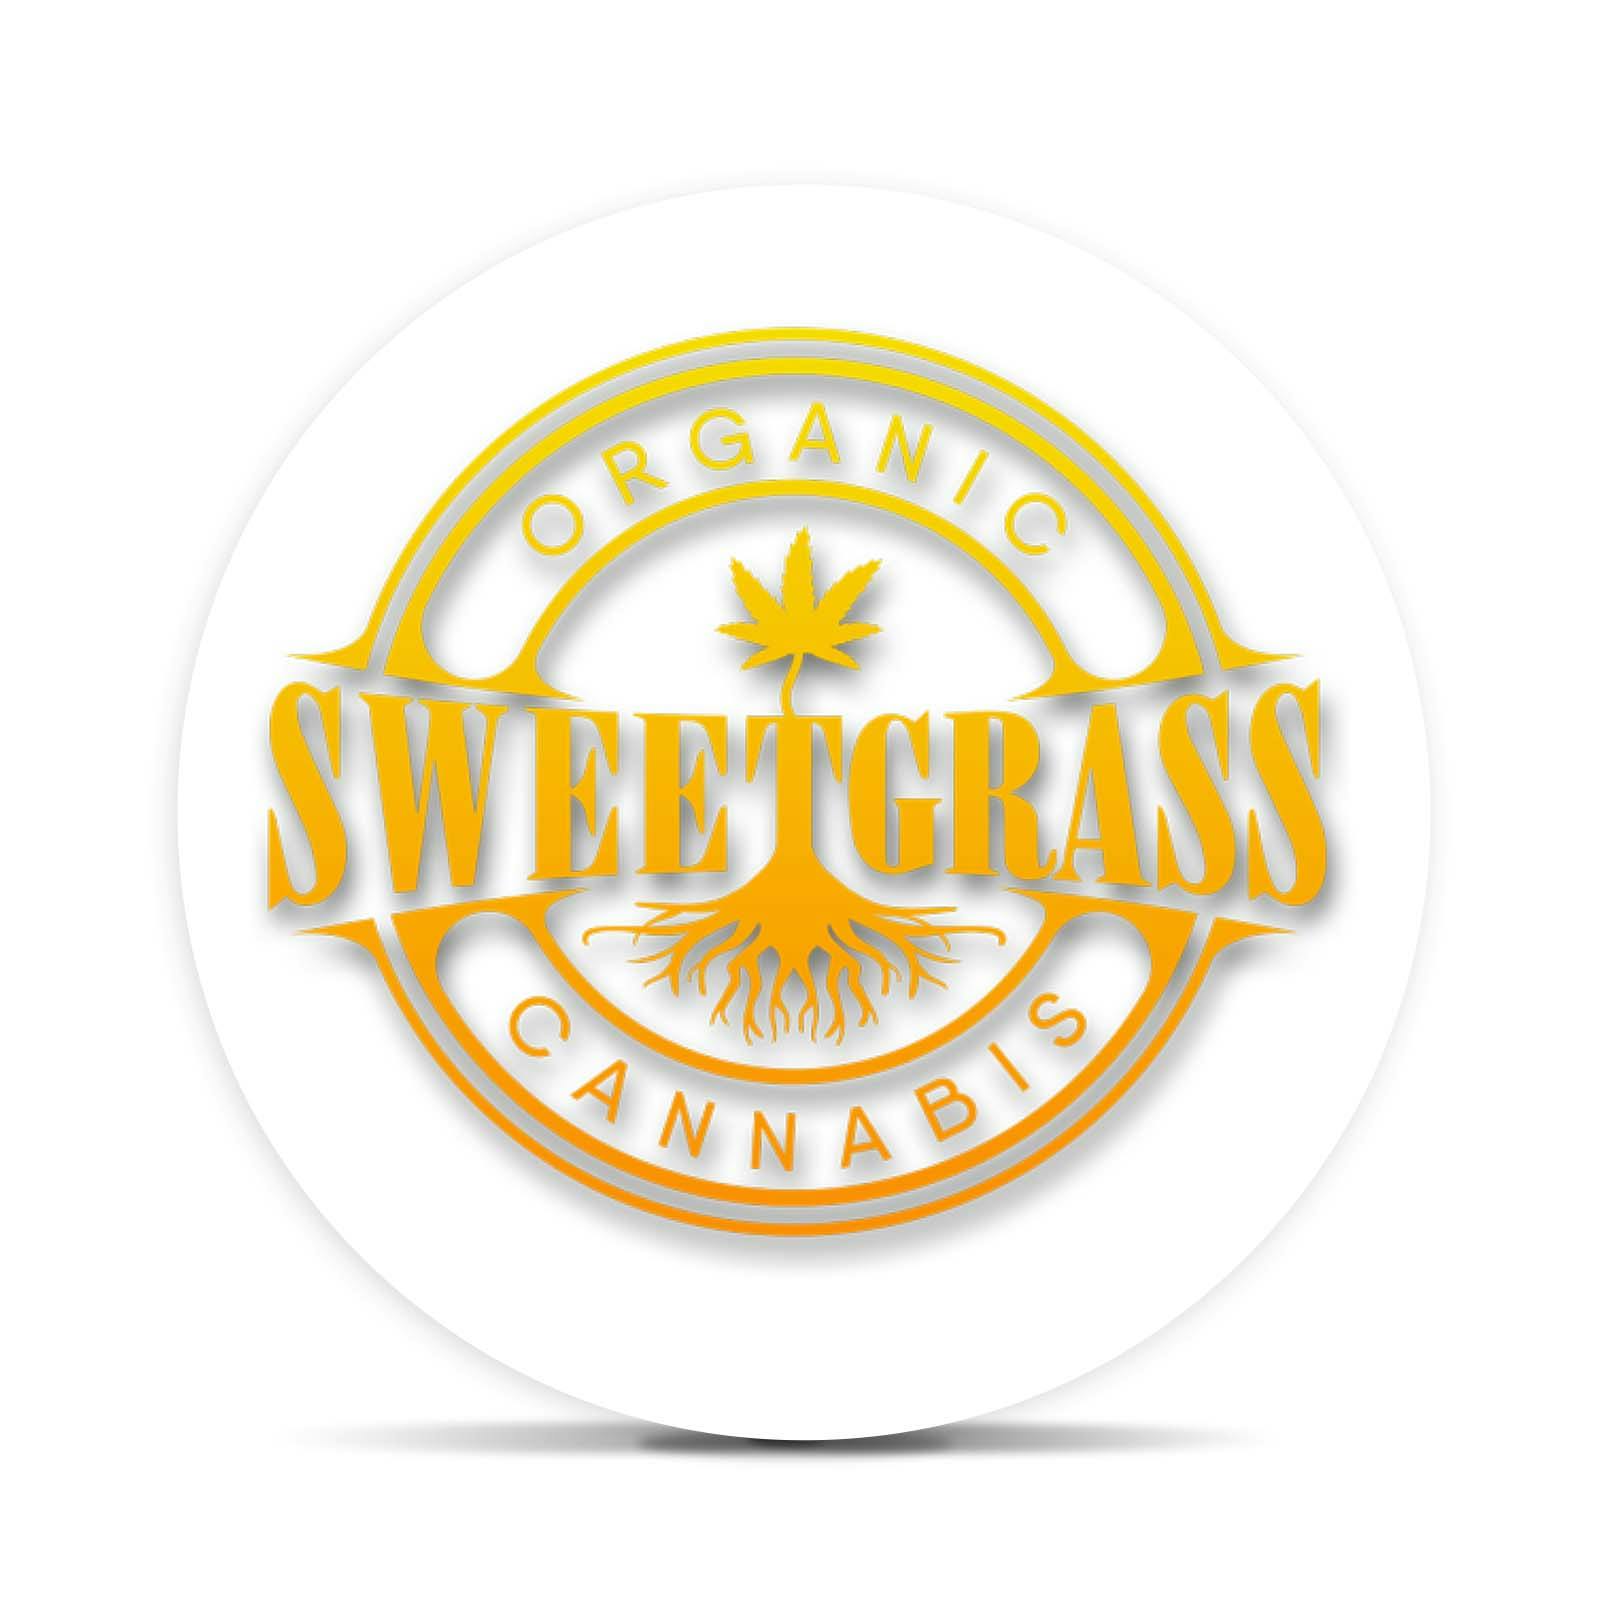 Sweetgrass Cannabis Crushed Velvet